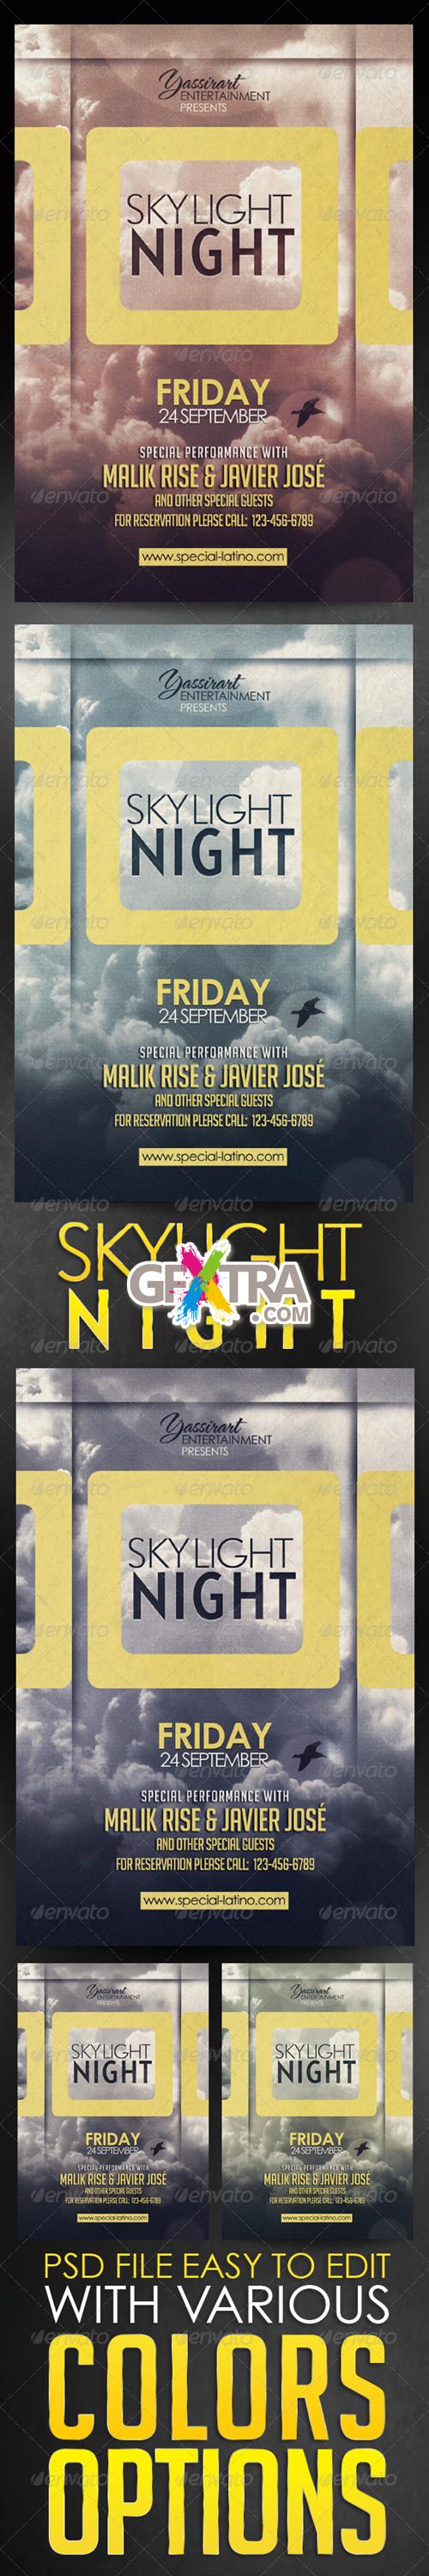 GraphicRiver - Skylight Night 3